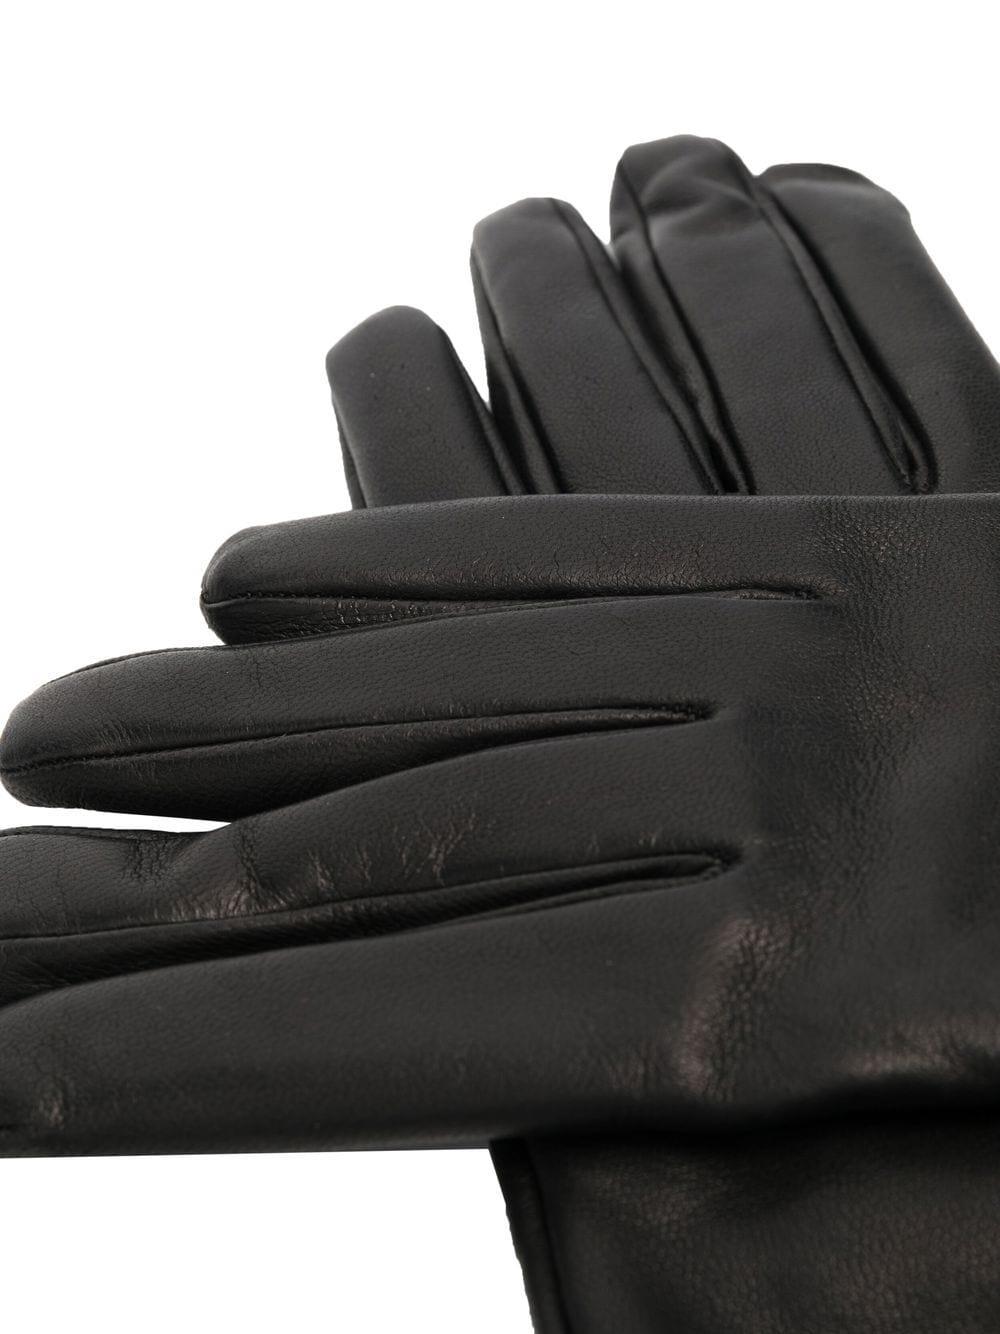 Saint Laurent silk-lined leather gloves - Black